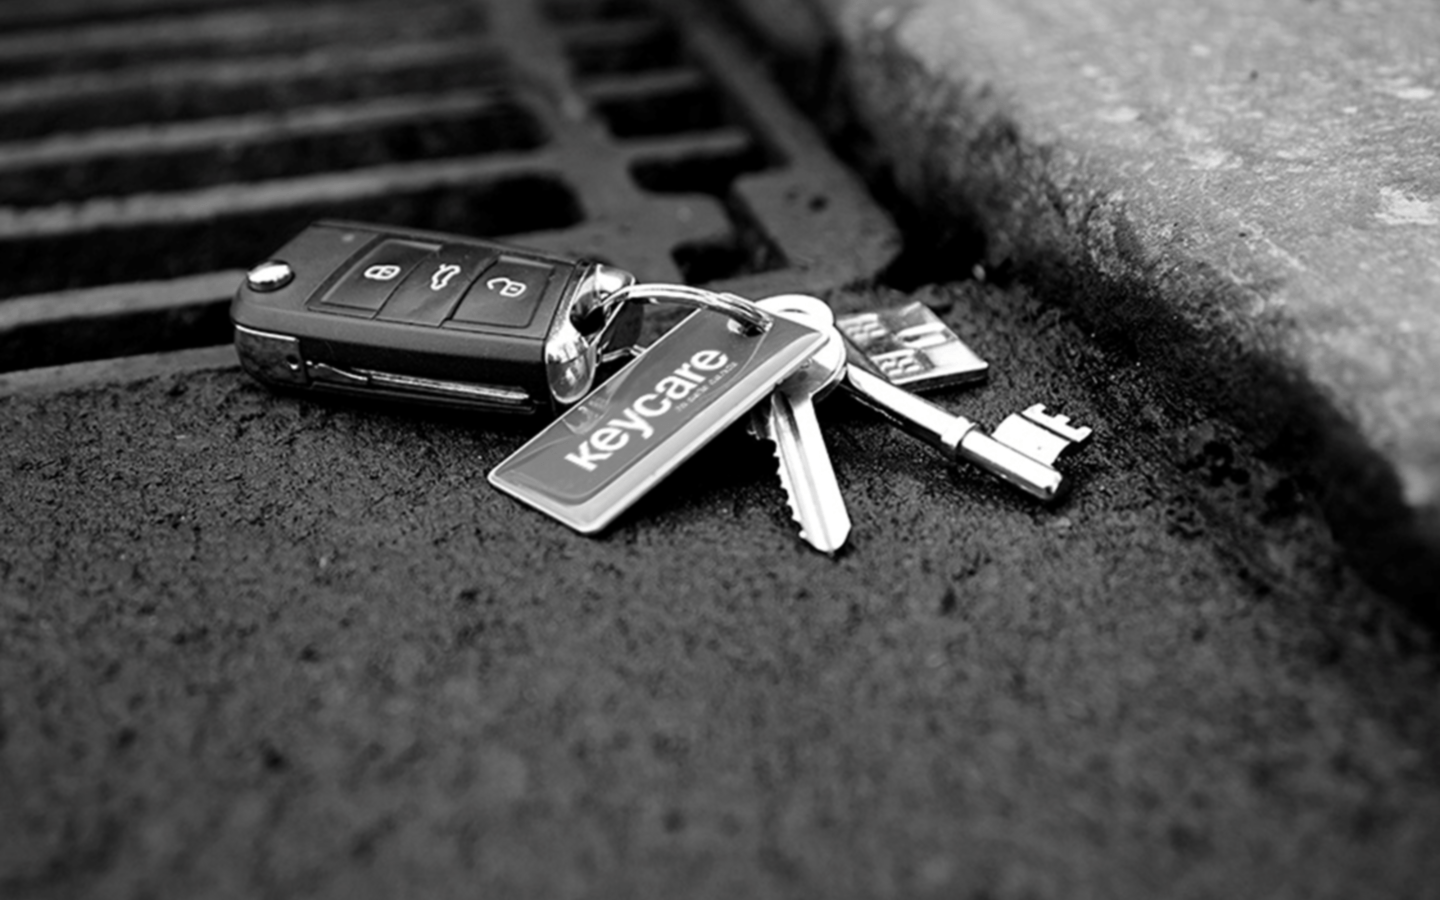 Lost keys with keycare fob.